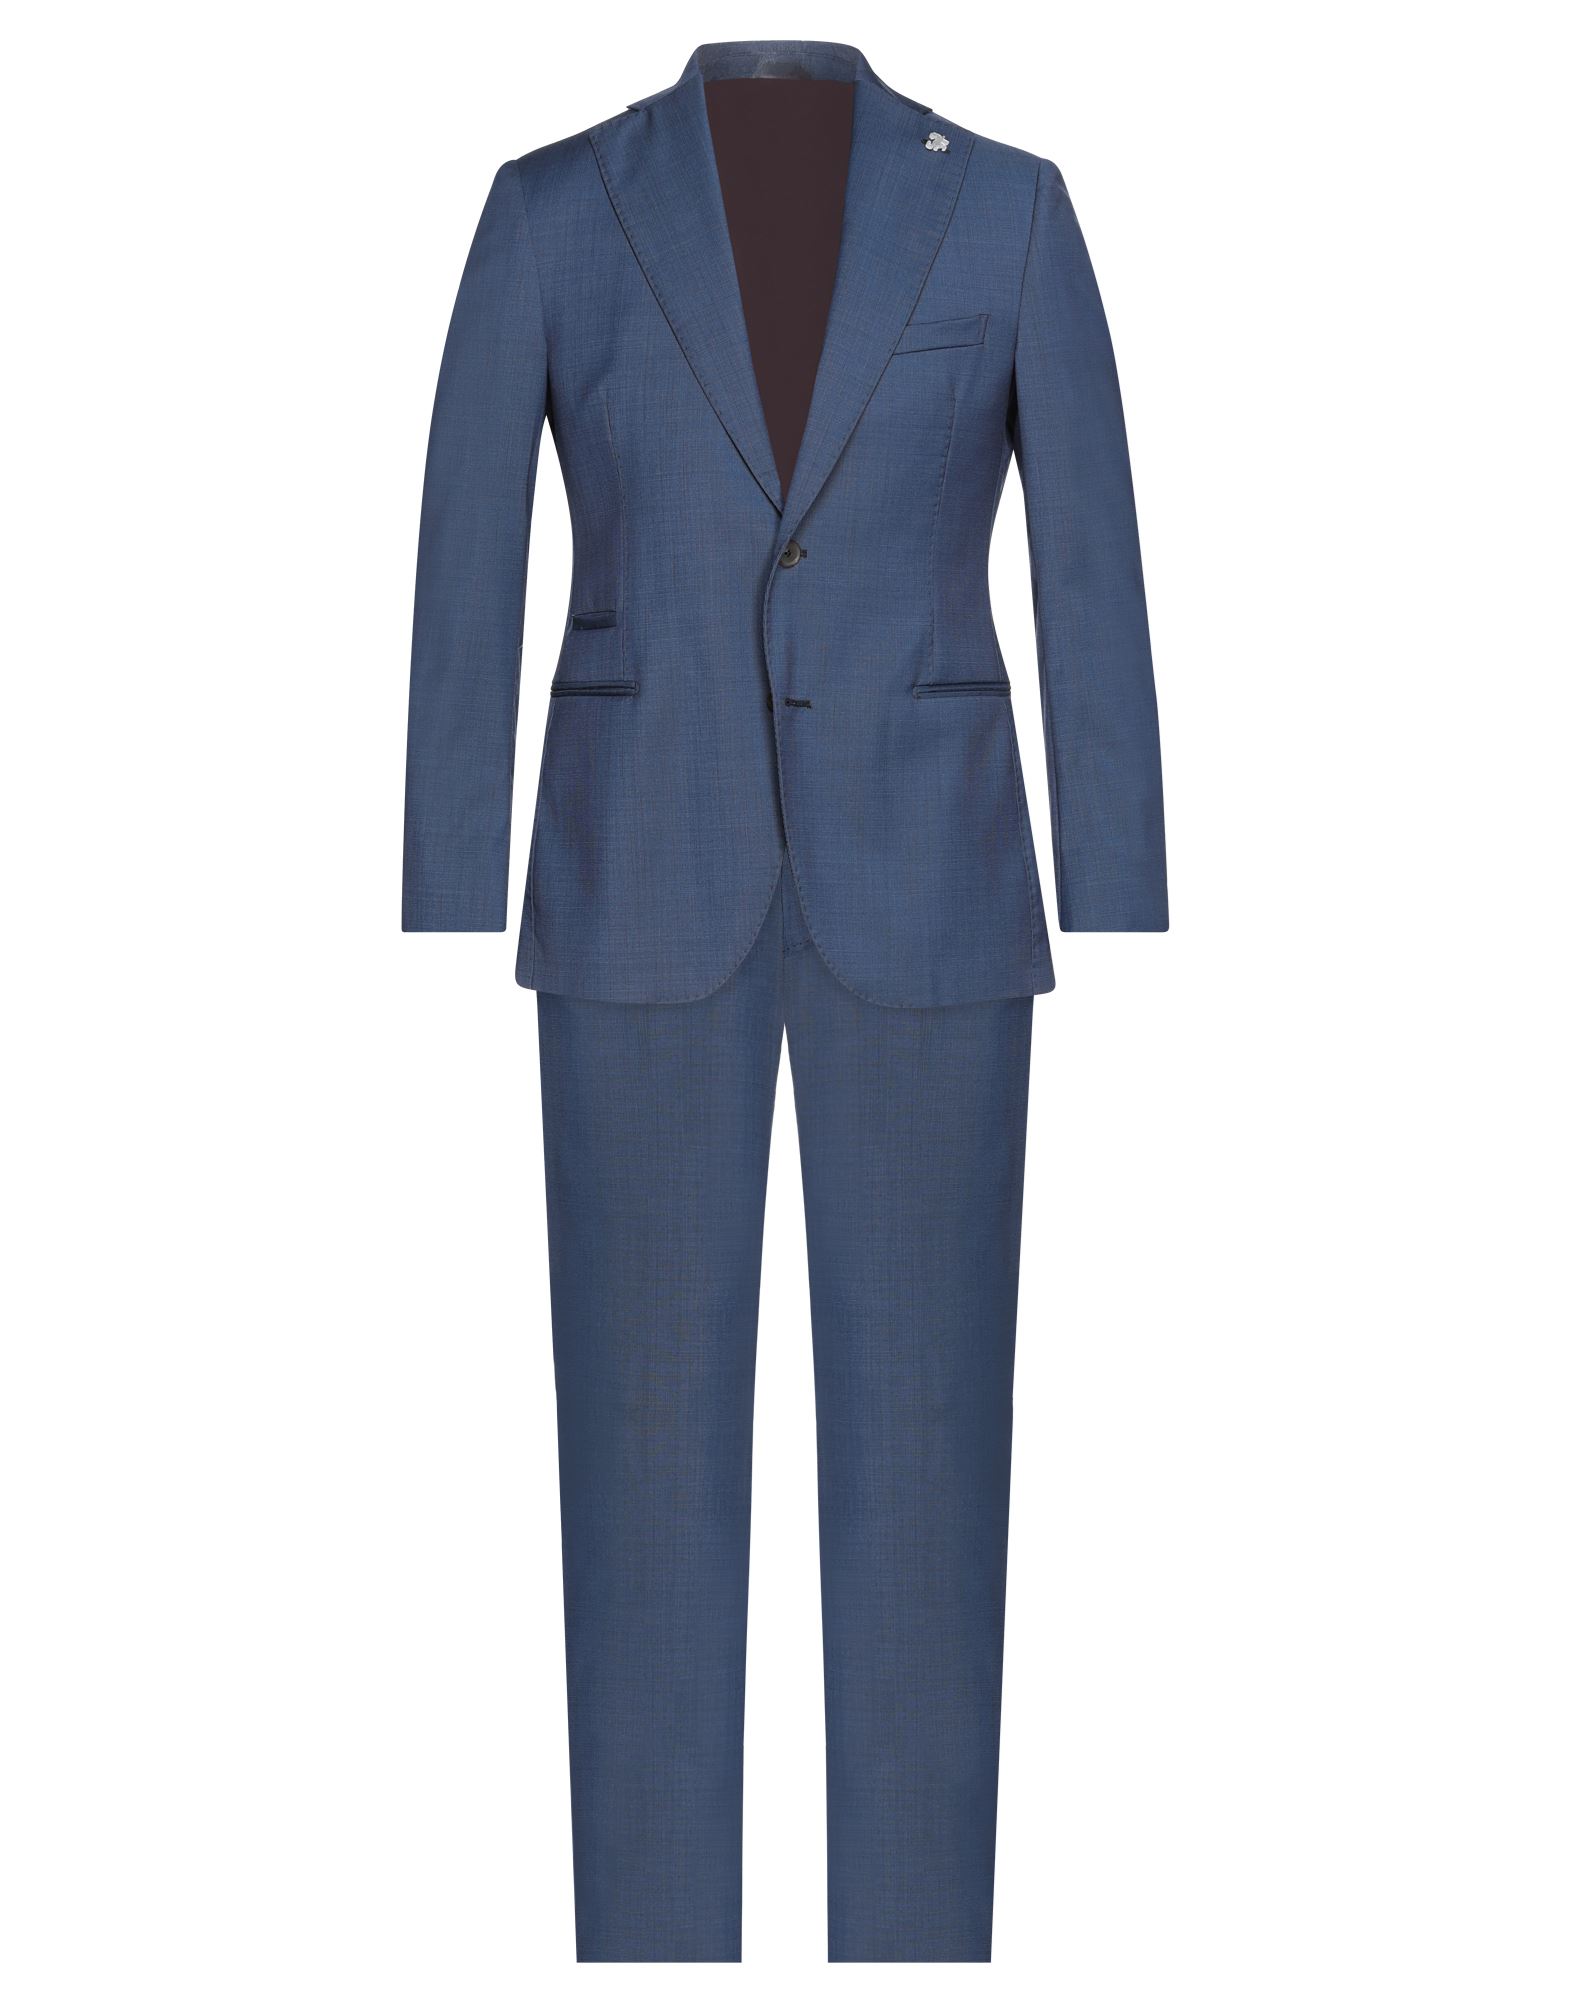 TOMBOLINI Suits | Smart Closet